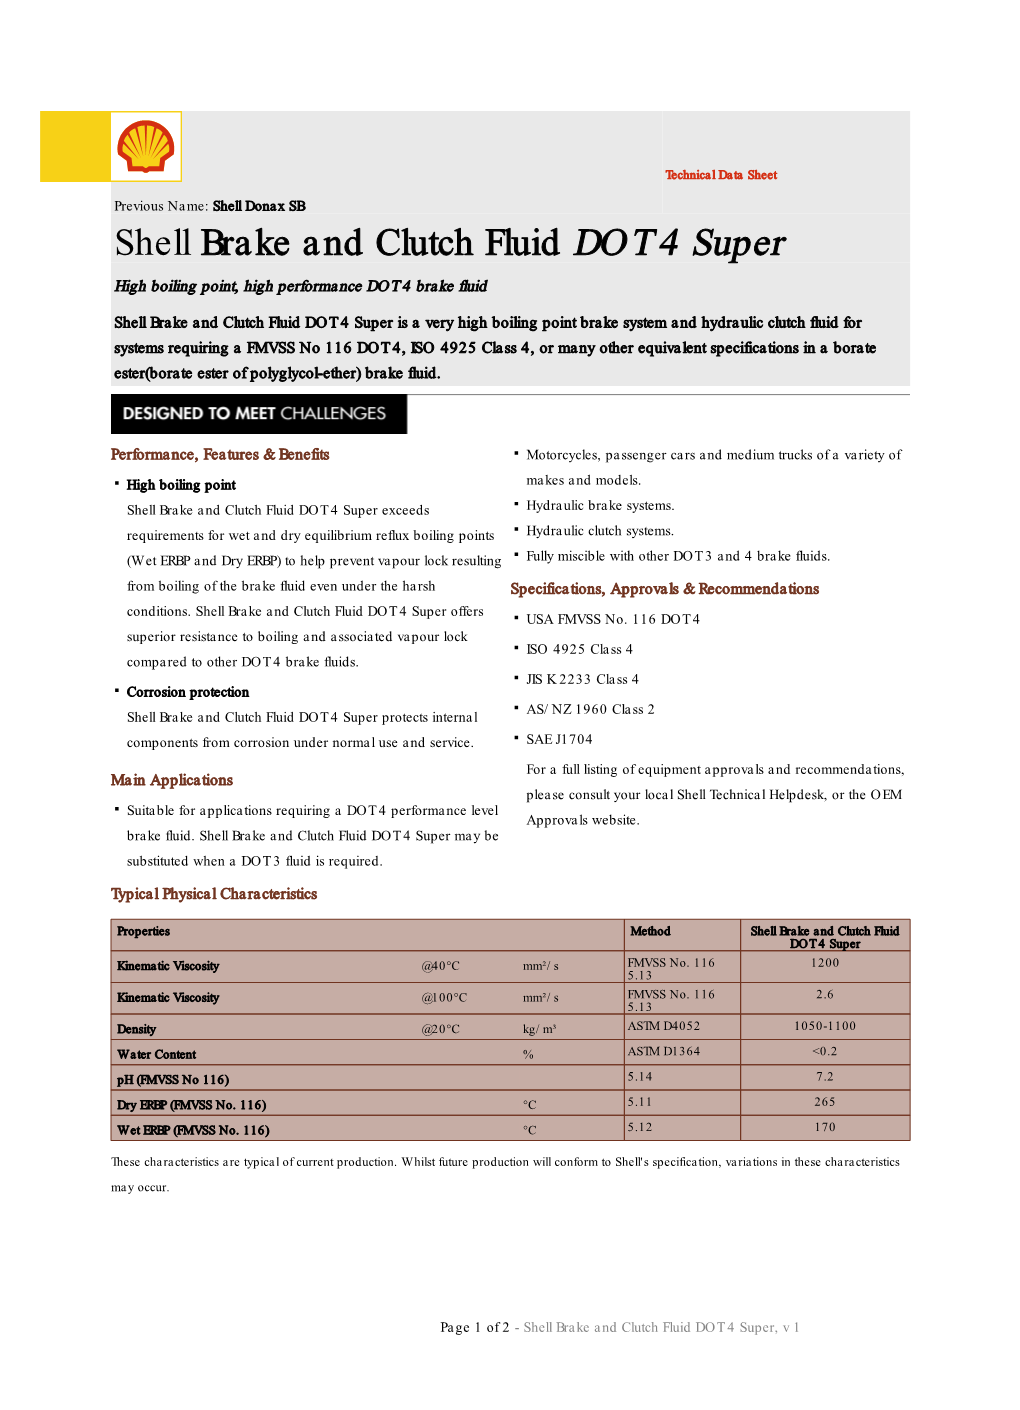 Shell Brake and Clutch Fluid DOT 4 Super